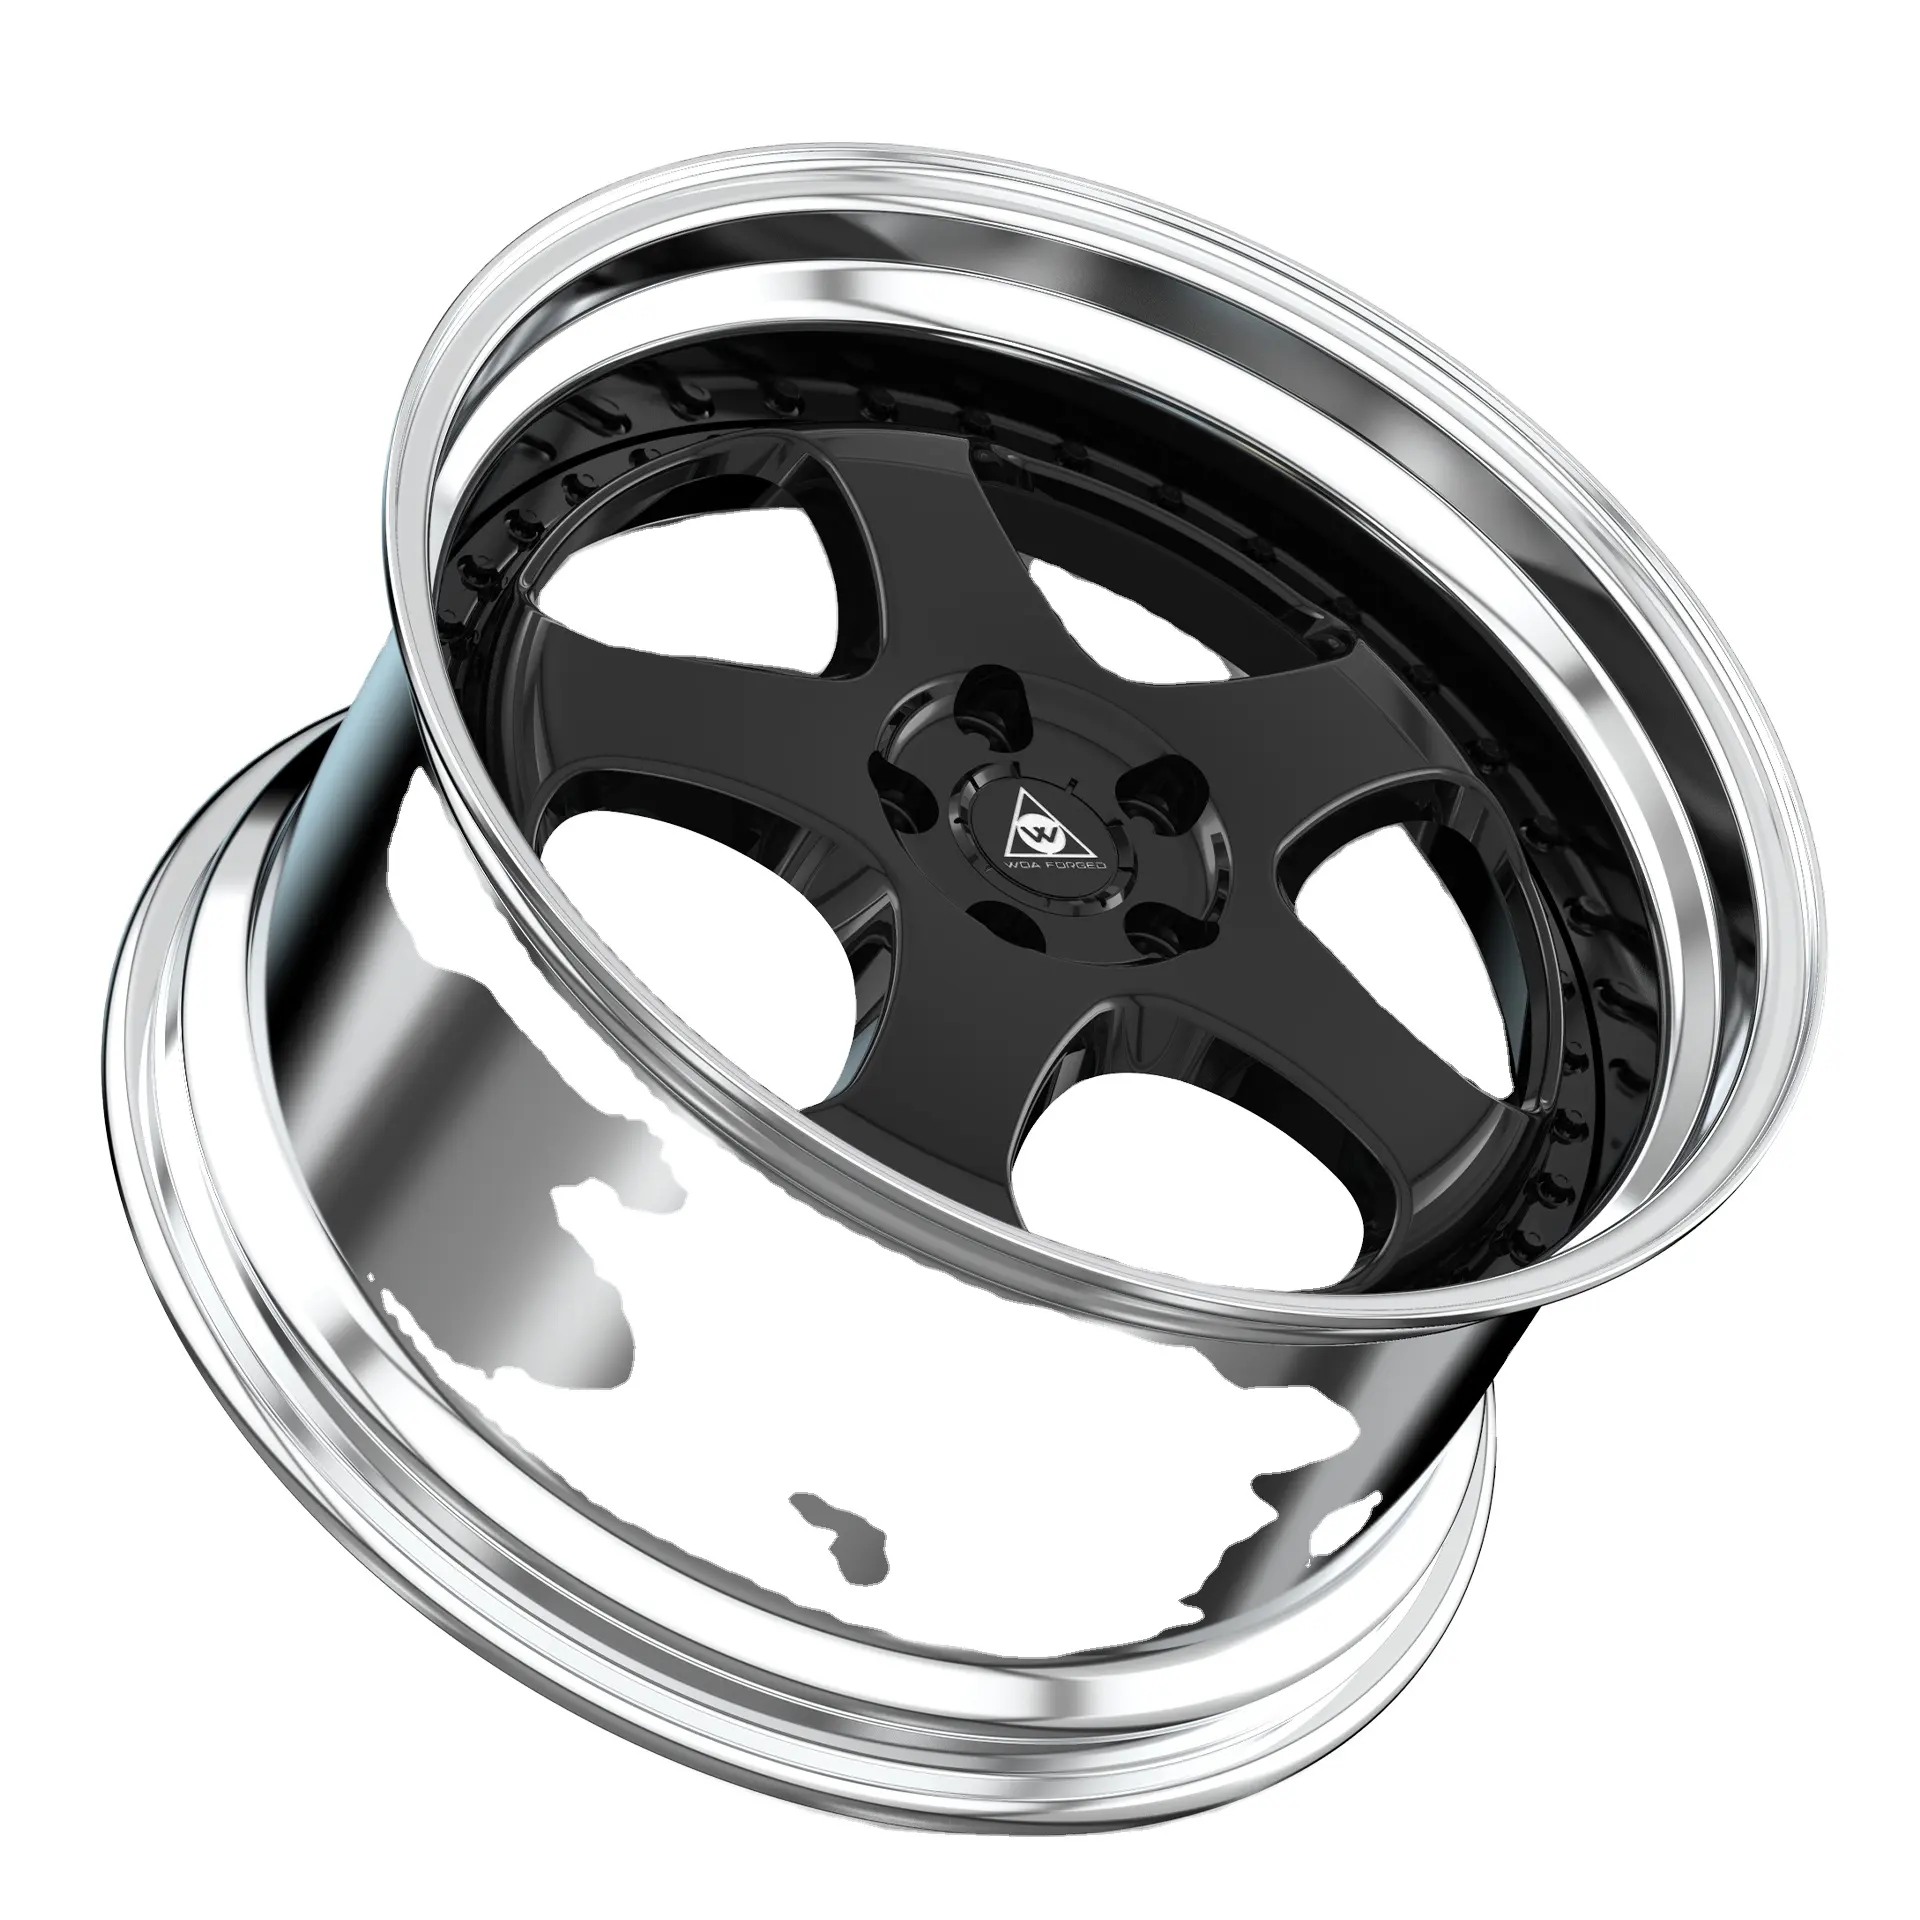 Racing Rim Forged Wheels Rines for Work Deep Dish Aluminum Alloy 18 19 20 21 22 Inch 5x112 5x114.3 5x120 Passenger Car 2-pcs